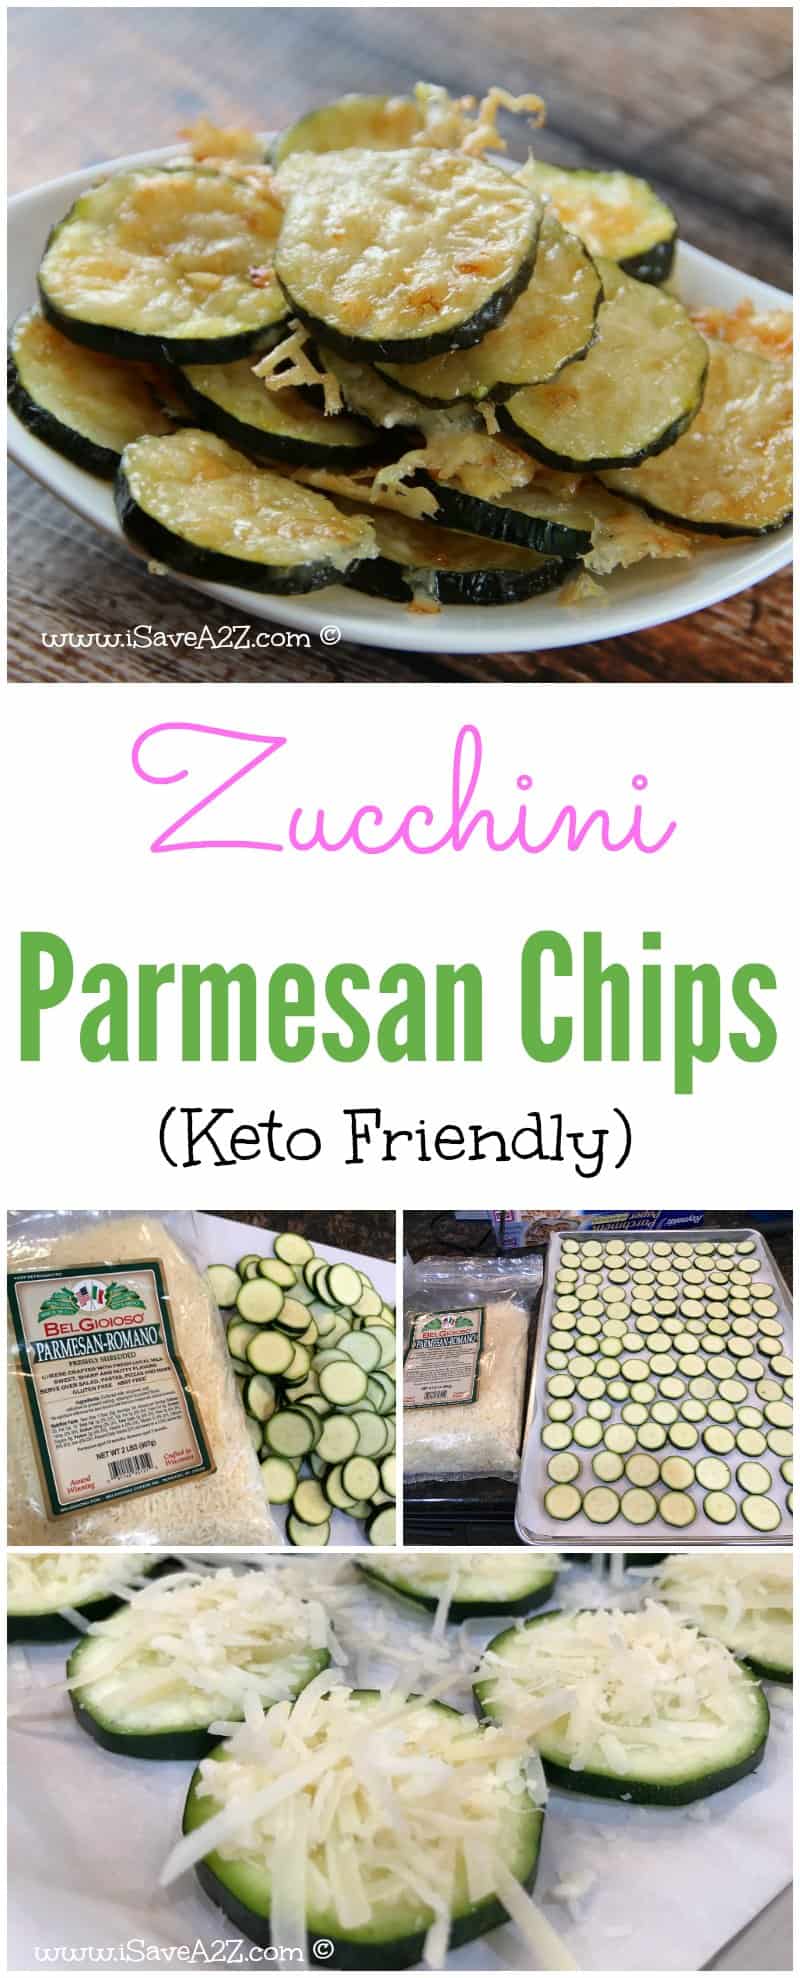 Low Carb Zucchini Parmesan Chips - Keto Friendly Recipe - iSaveA2Z.com